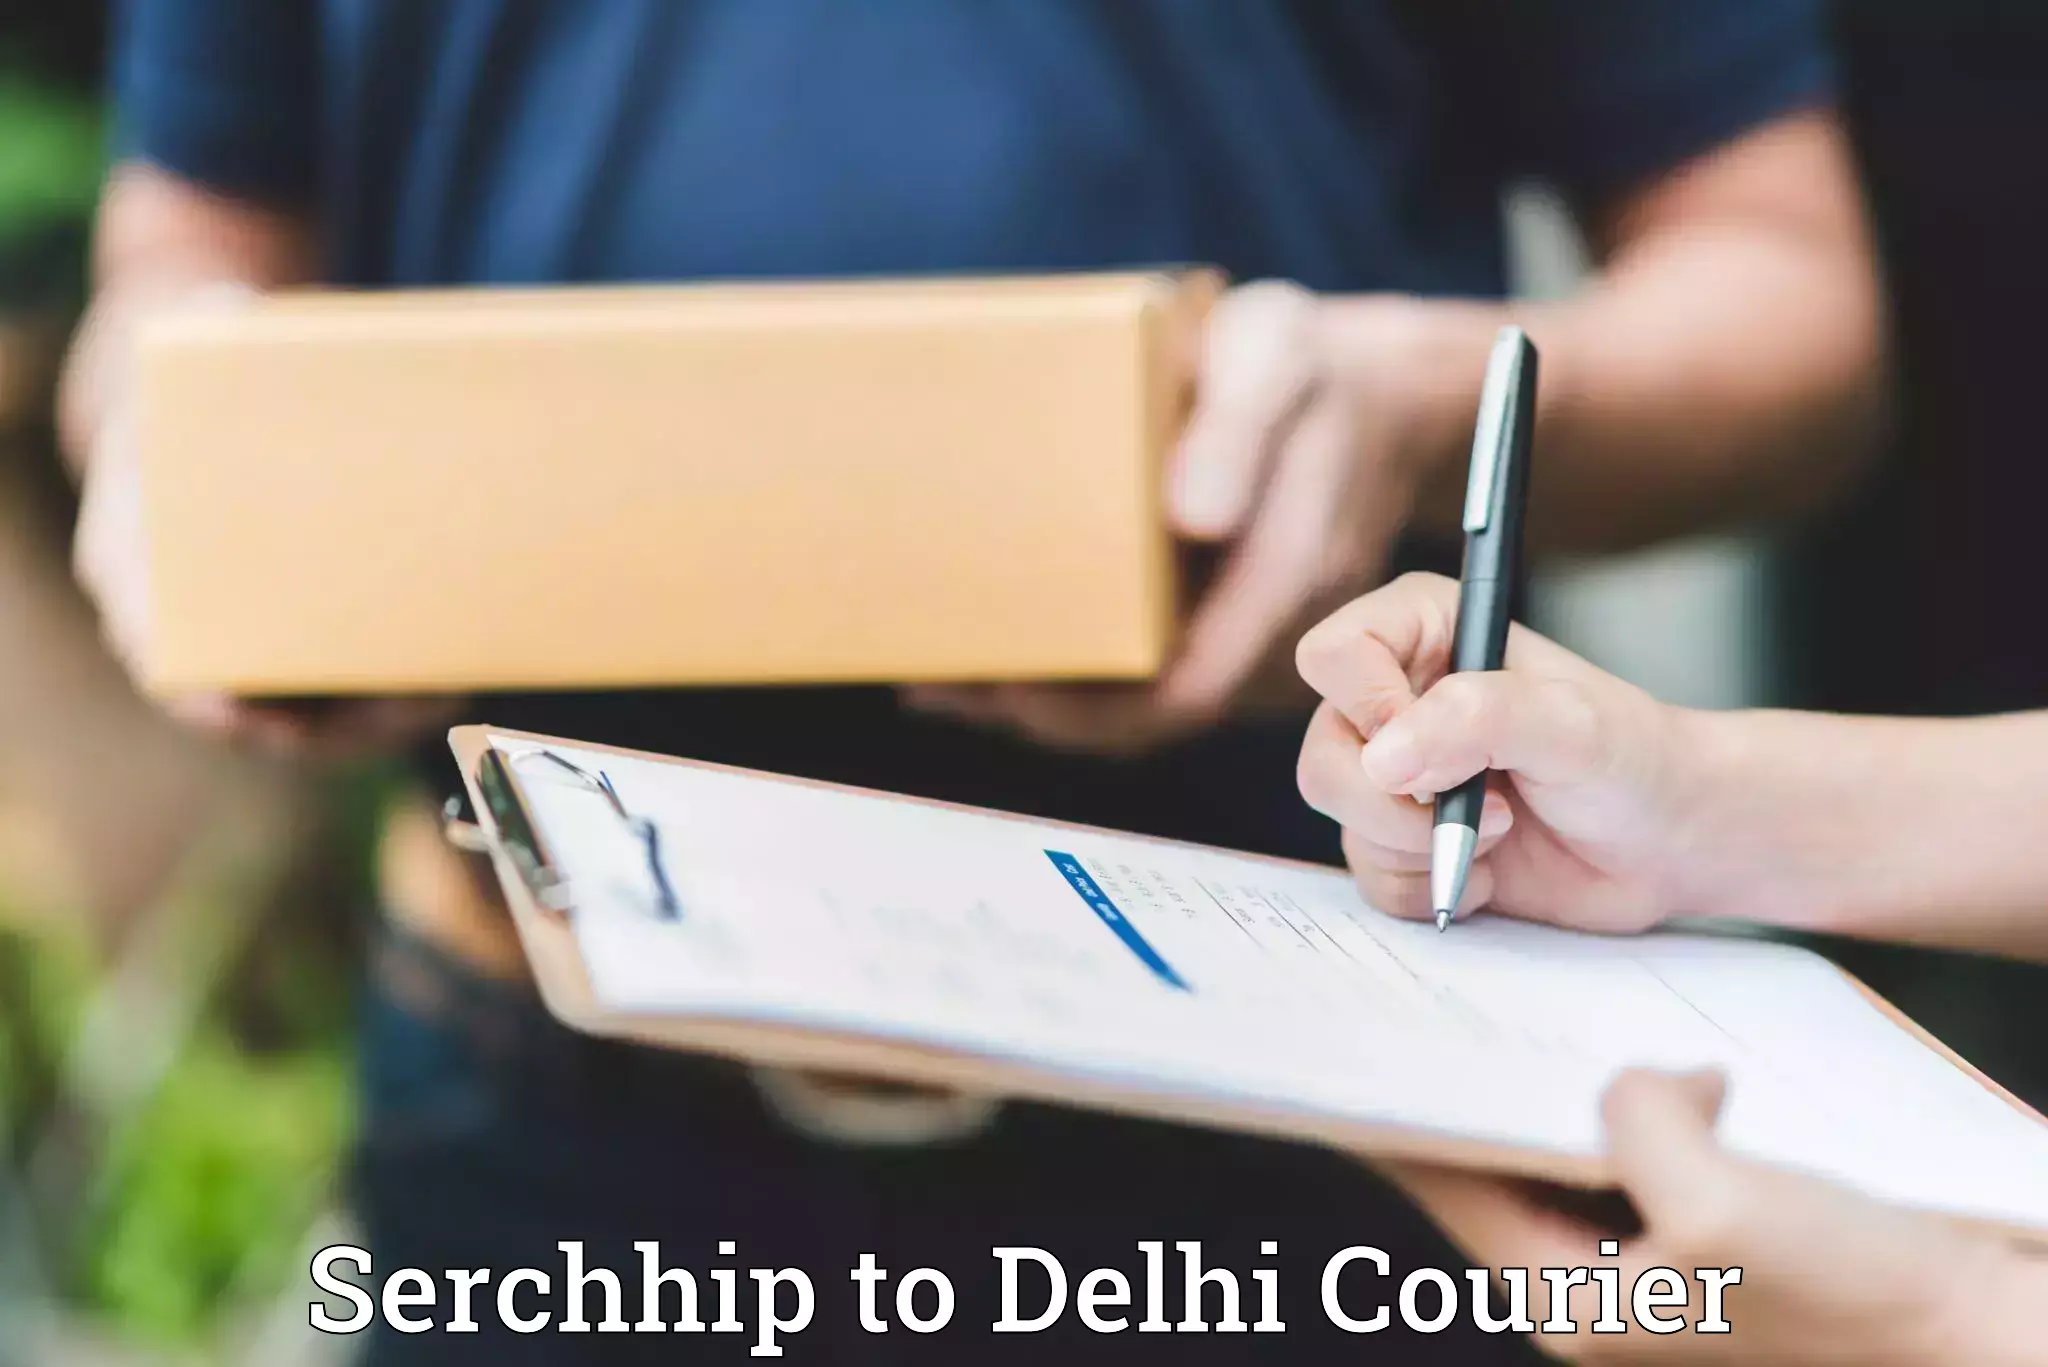 Full-service furniture transport Serchhip to University of Delhi